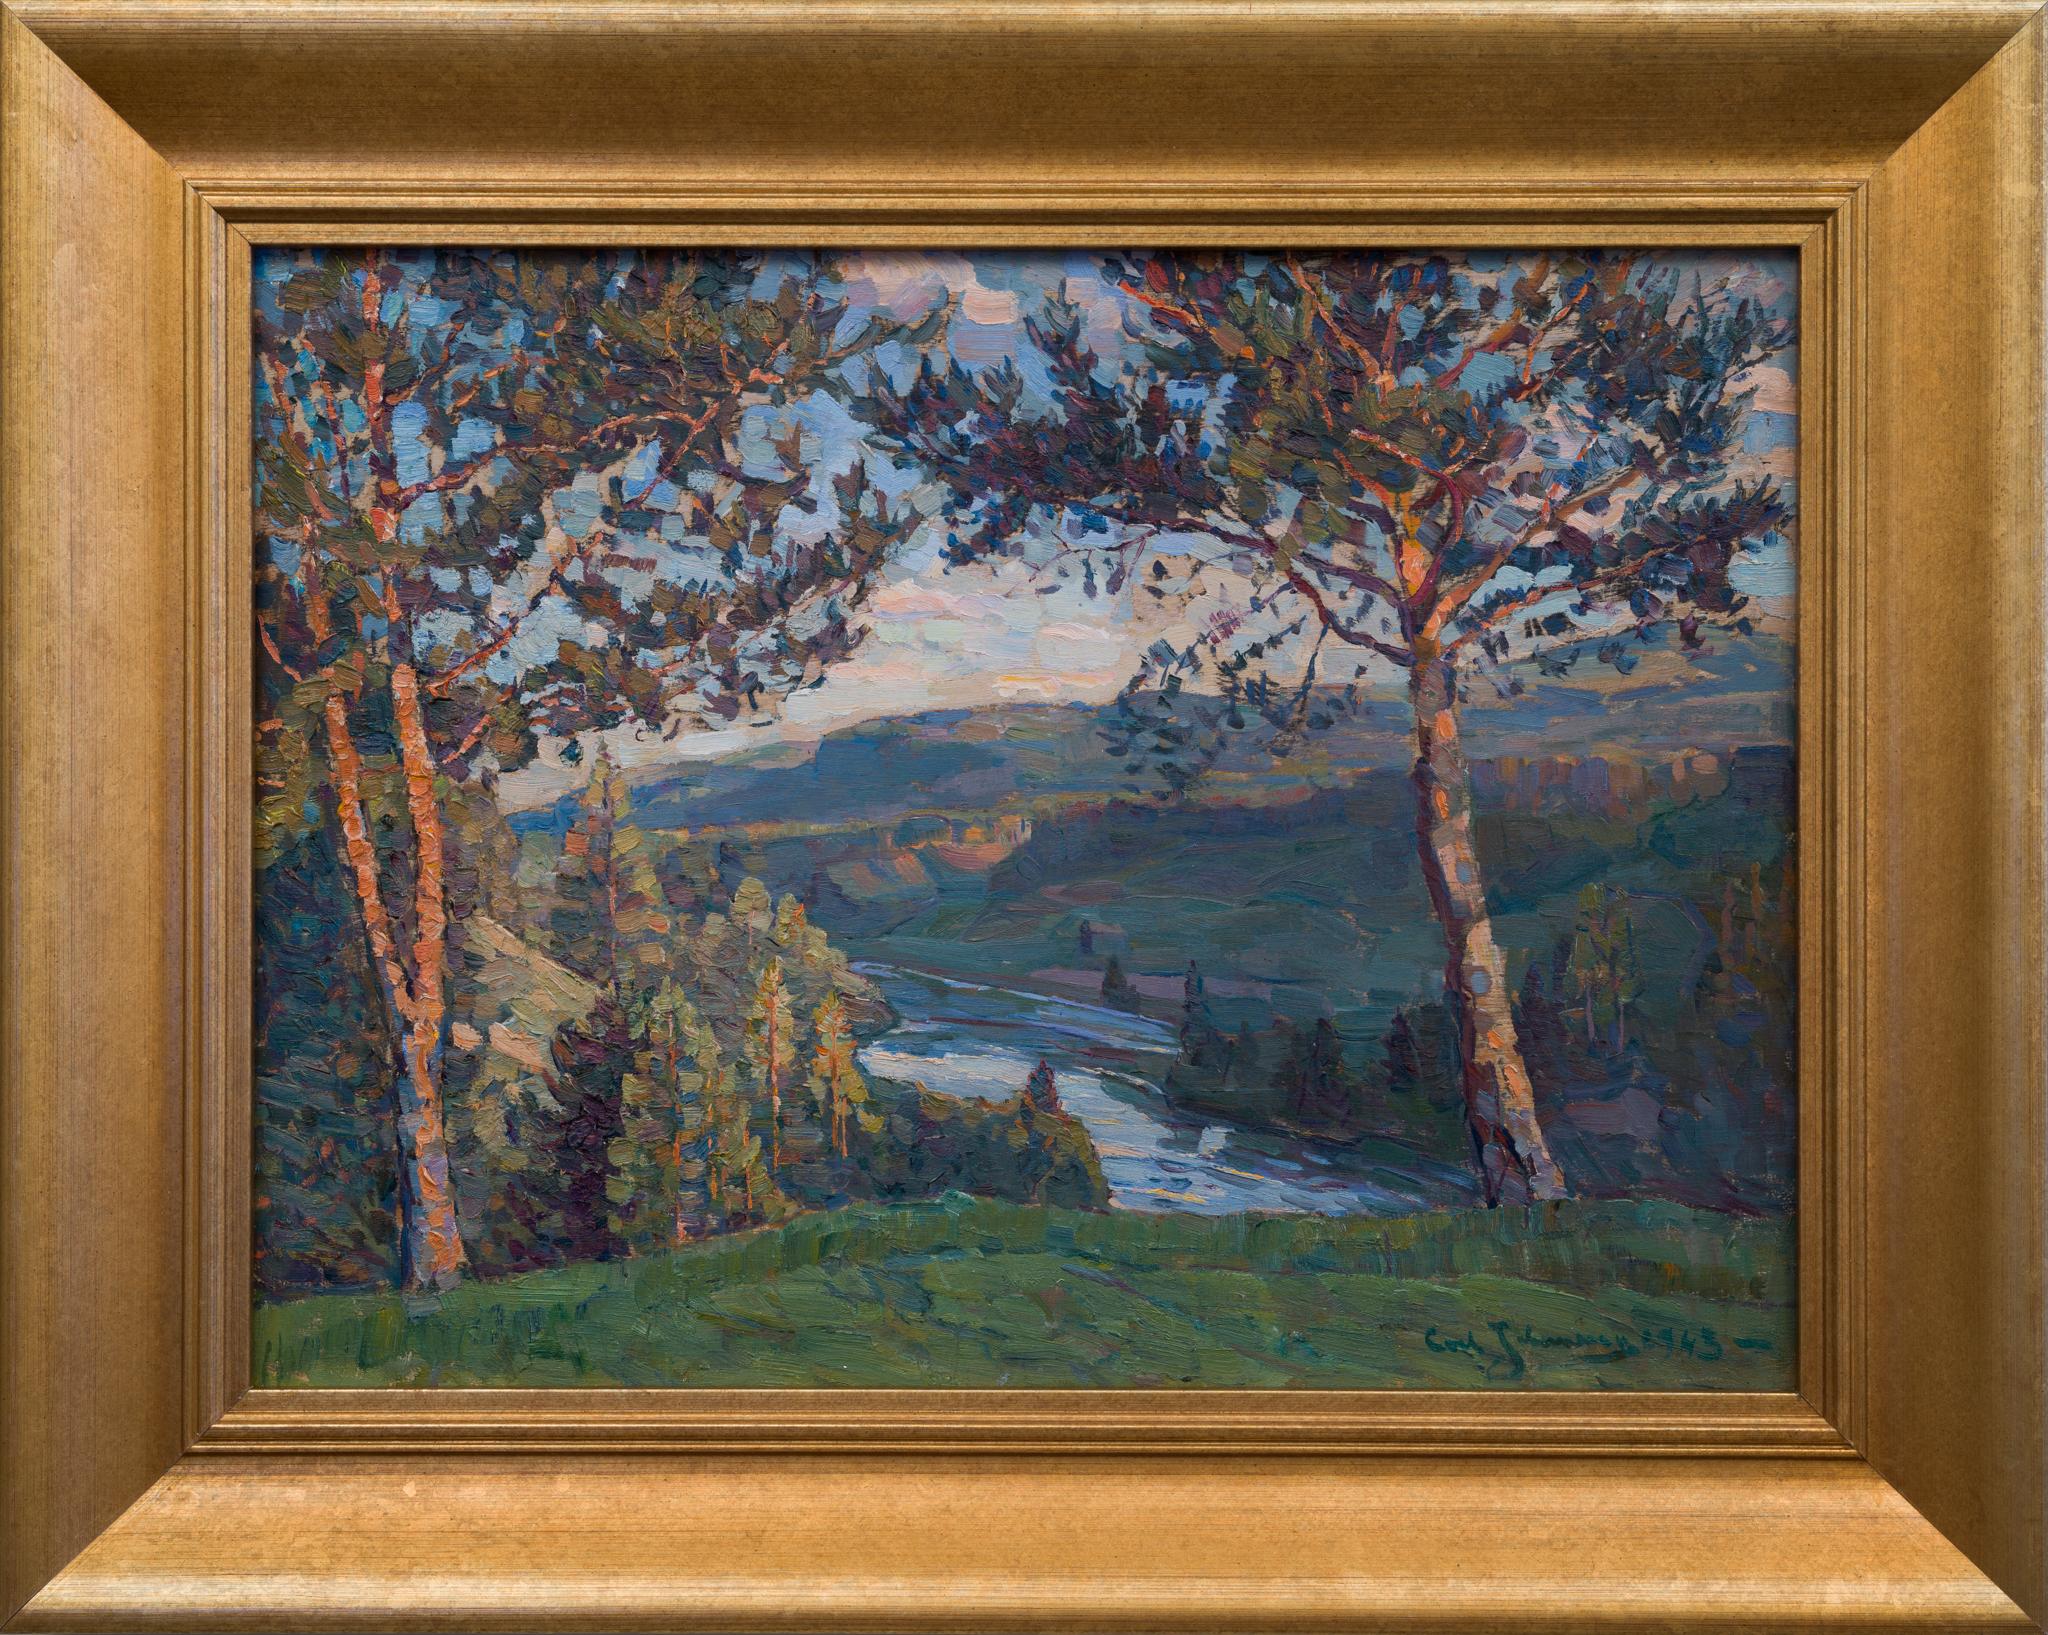 A Tranquil Landscape View, 1943 by "Ultramarine Johansson"